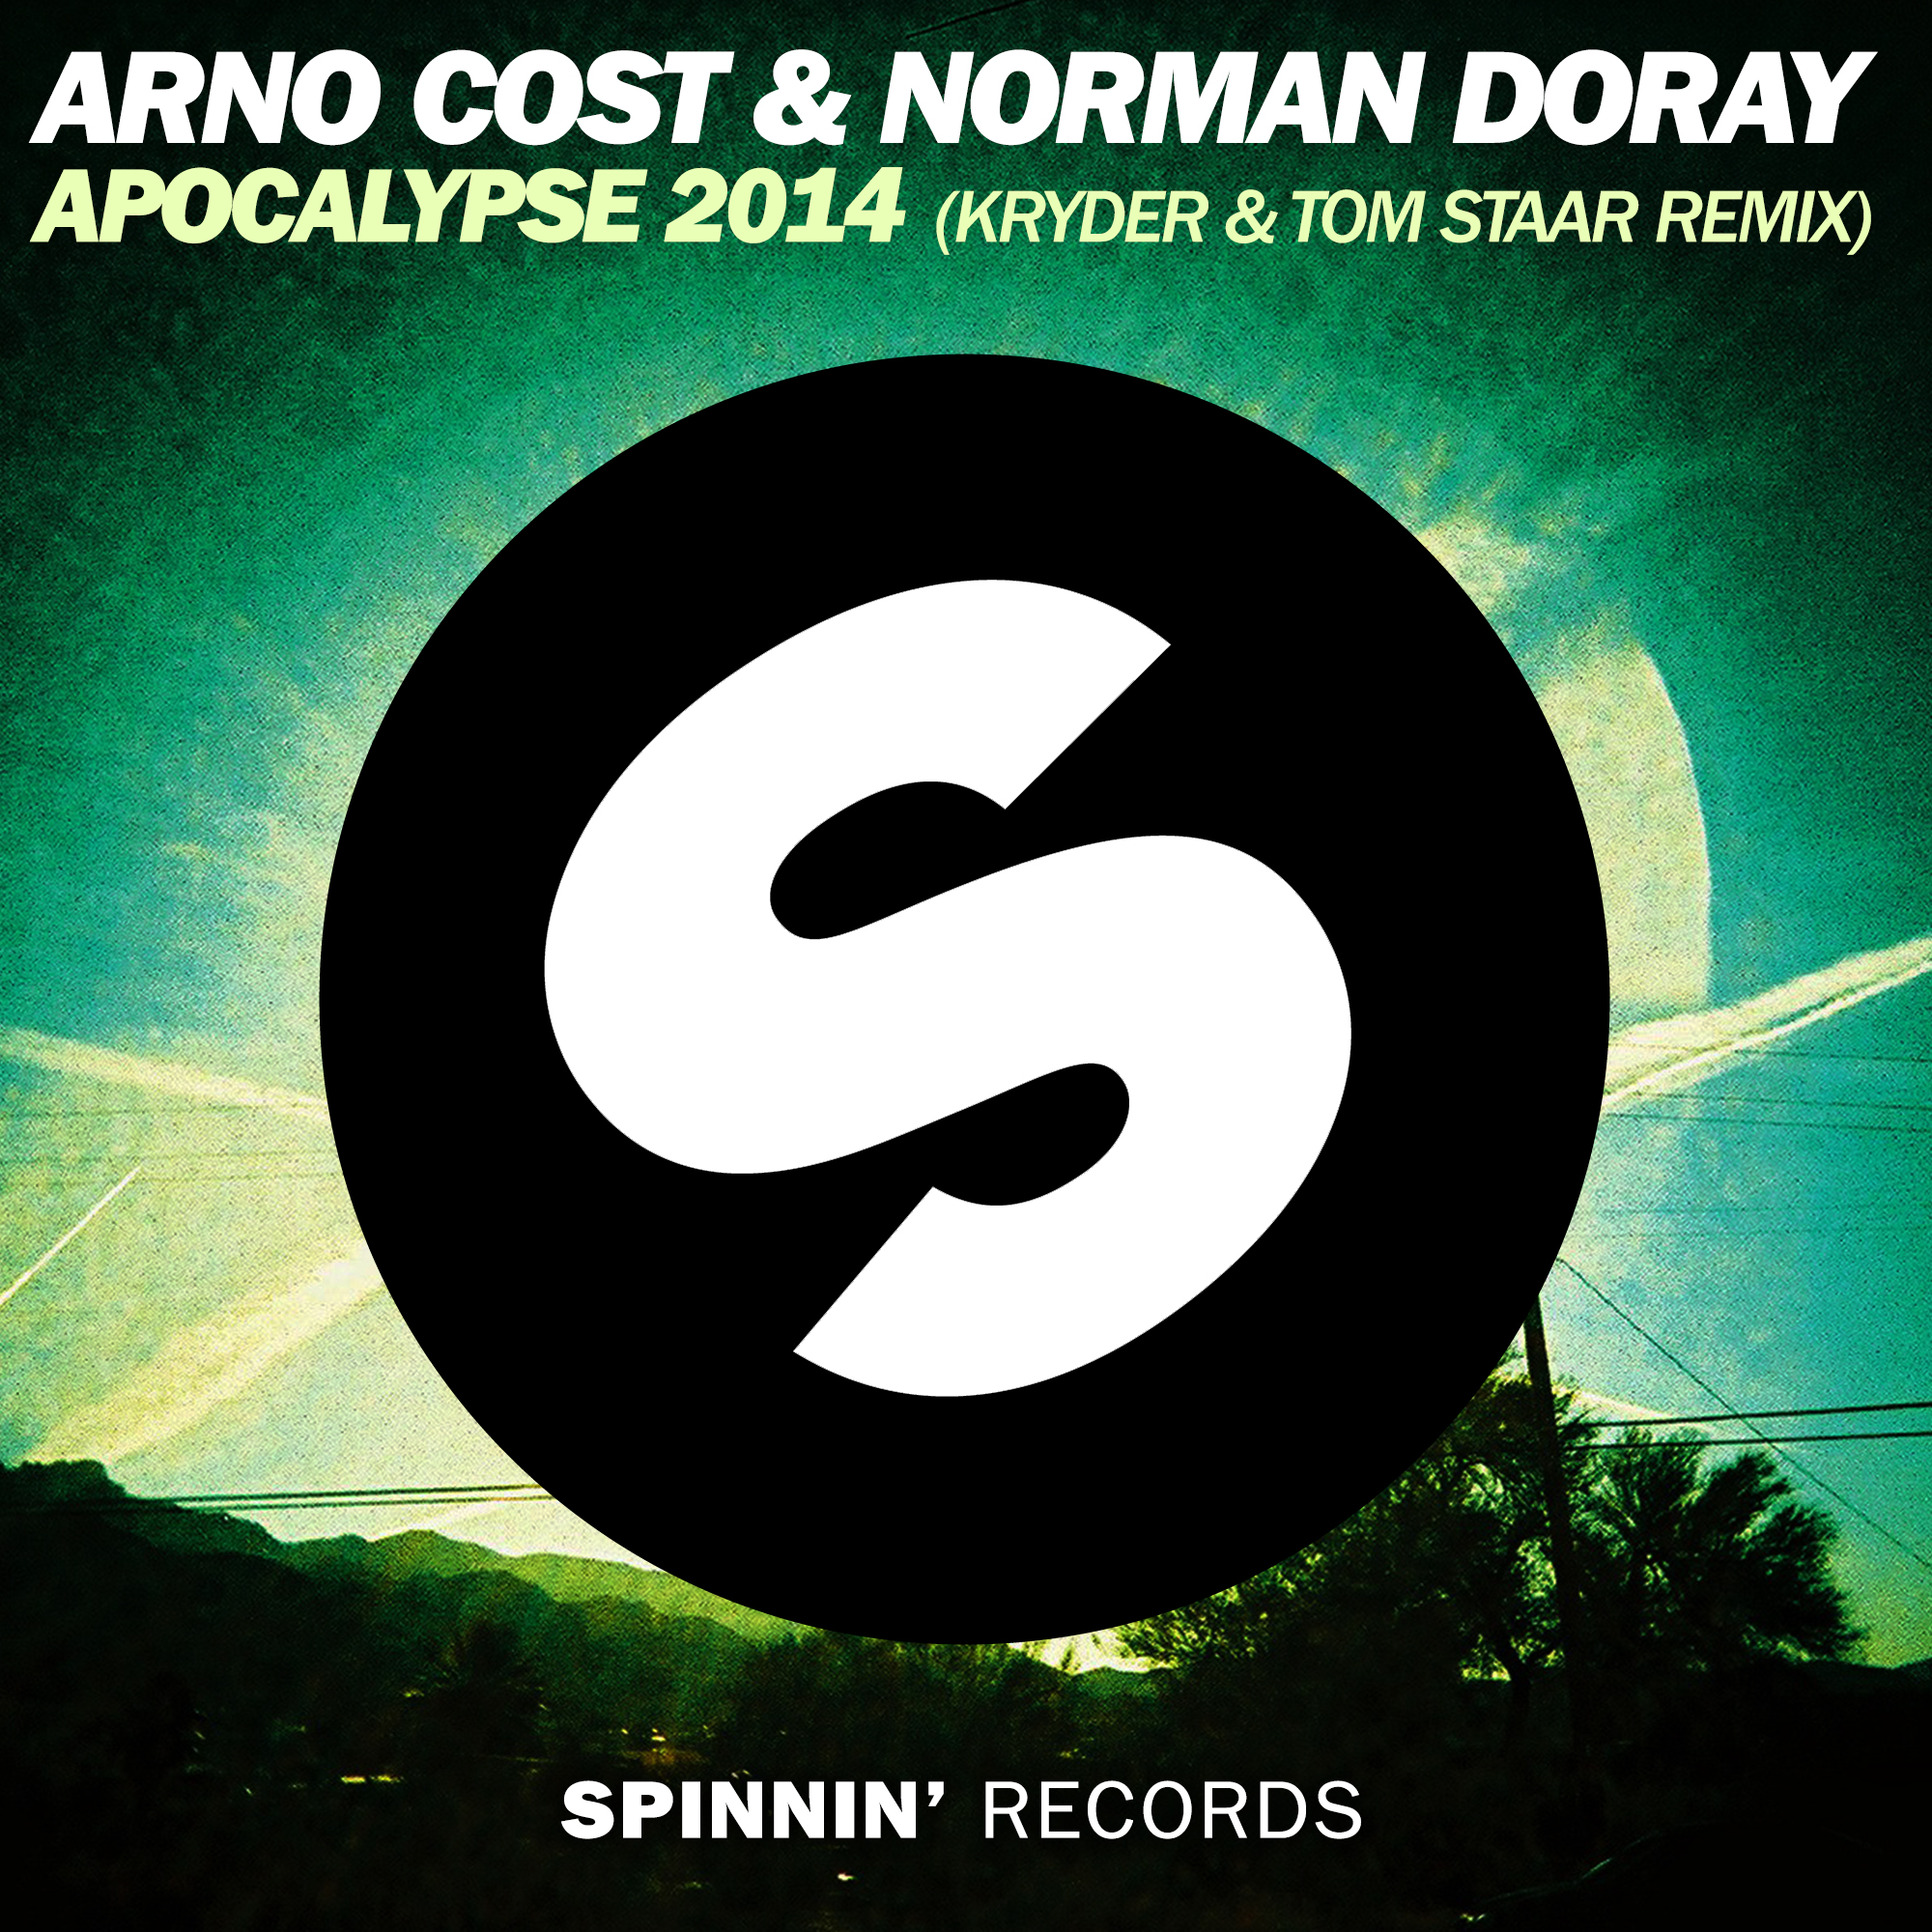 Preuzimanje datoteka Arno Cost & Norman Doray - Apocalypse 2014 (Kryder & Tom Staar Remix)